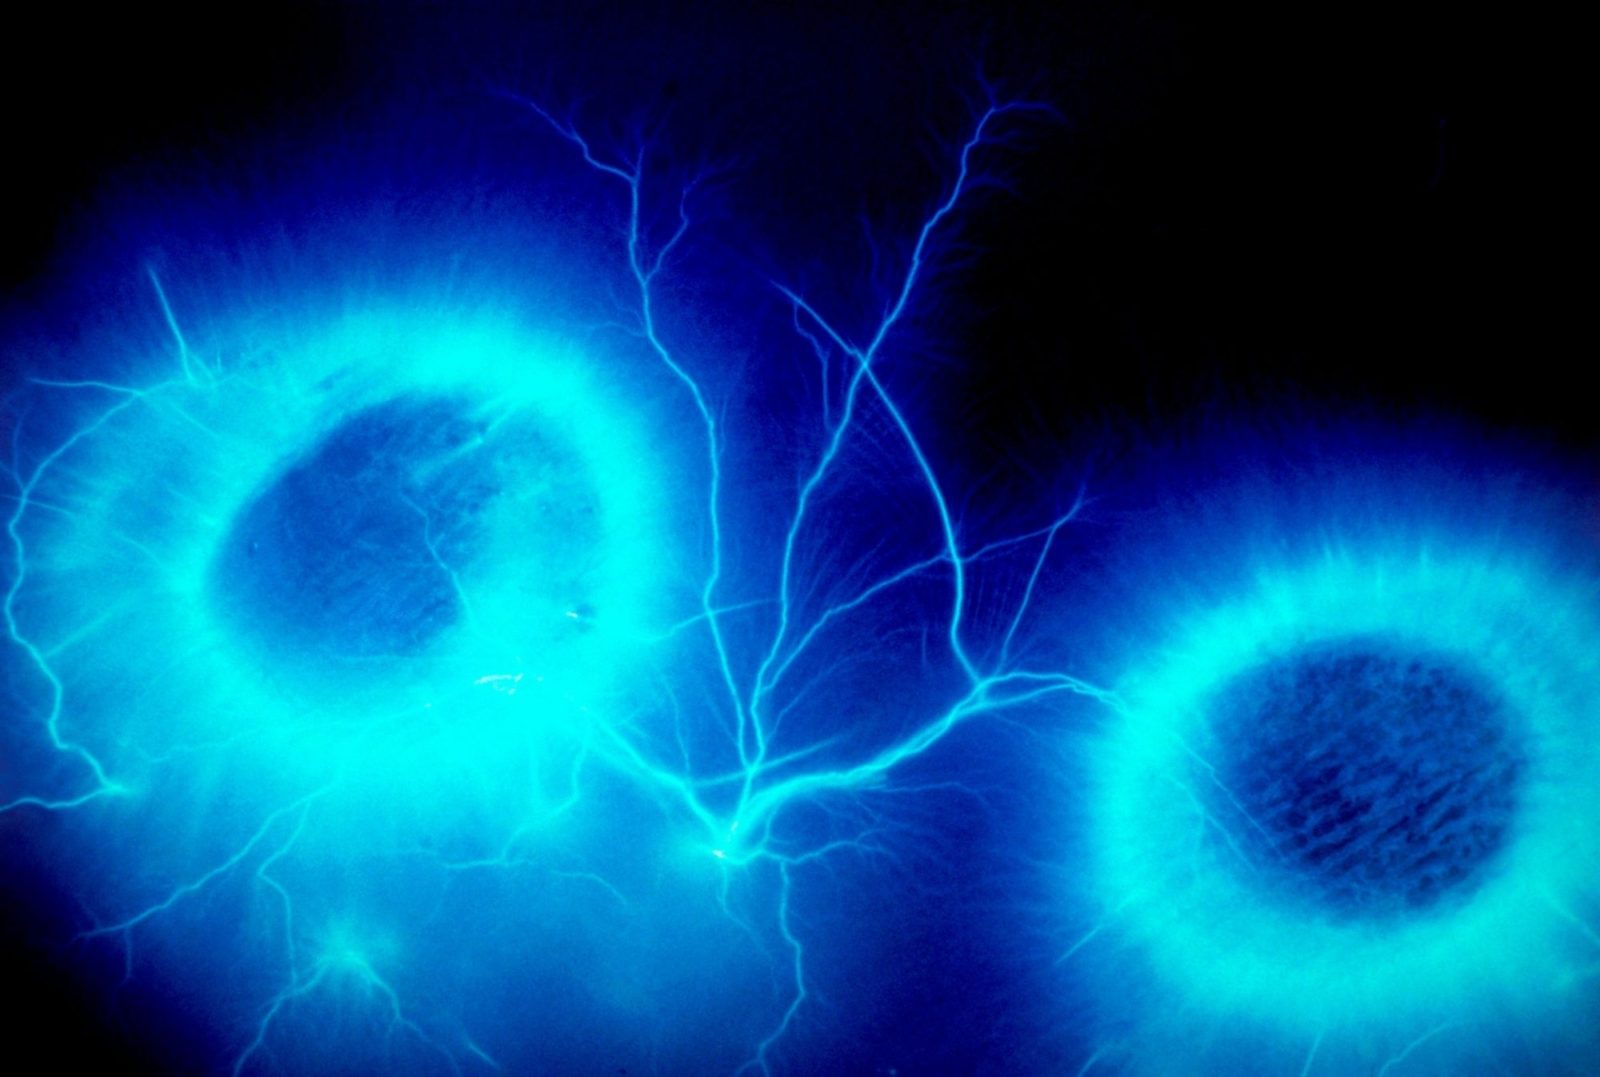 Kirlian photography of the electromagnetic discharge between two fingertips.